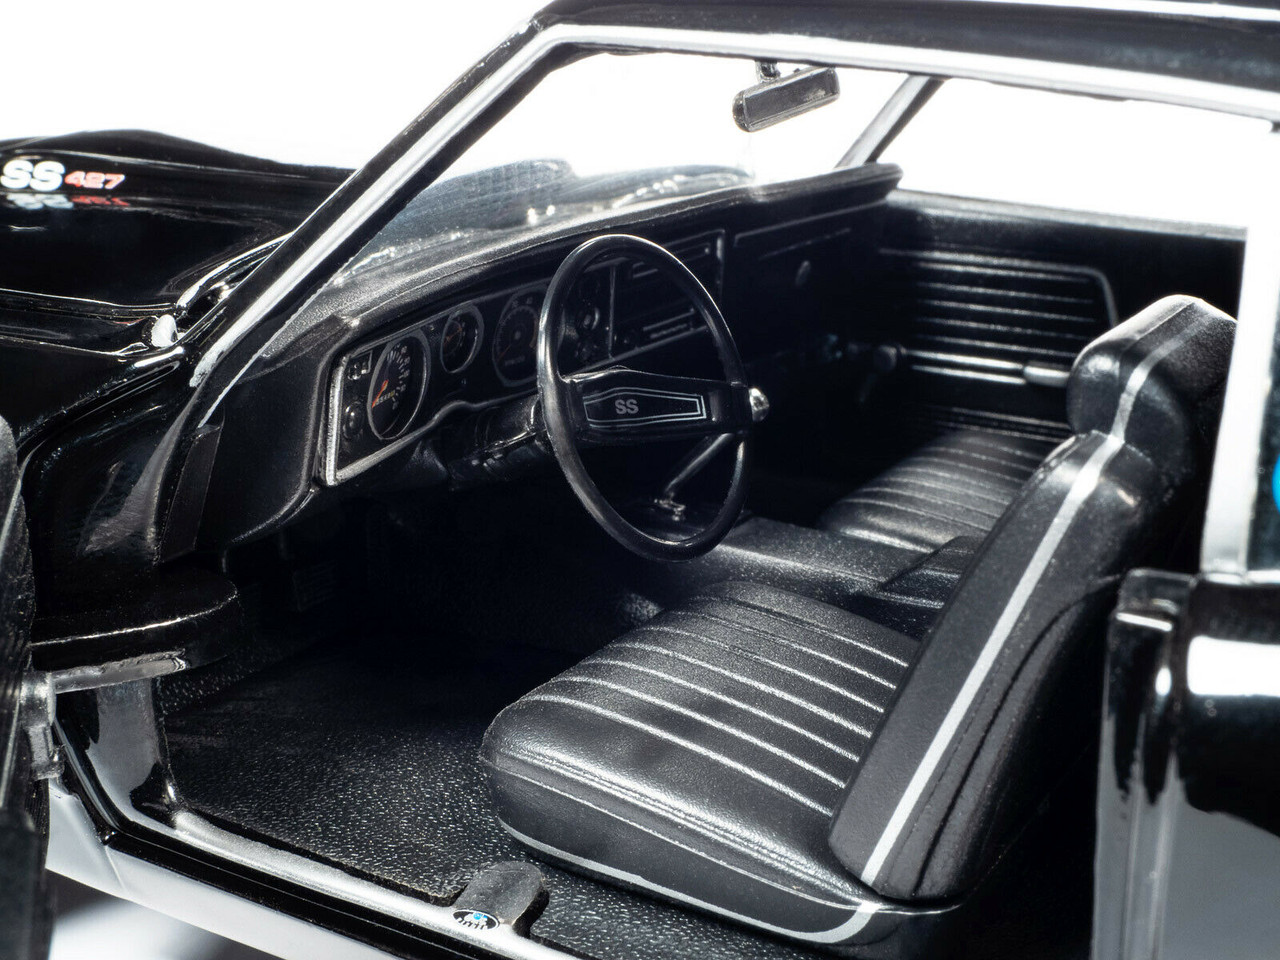 1/18 Auto World 1969 Chevrolet Chevelle Hardtop (Baldwin Motion) Black Diecast Car Model